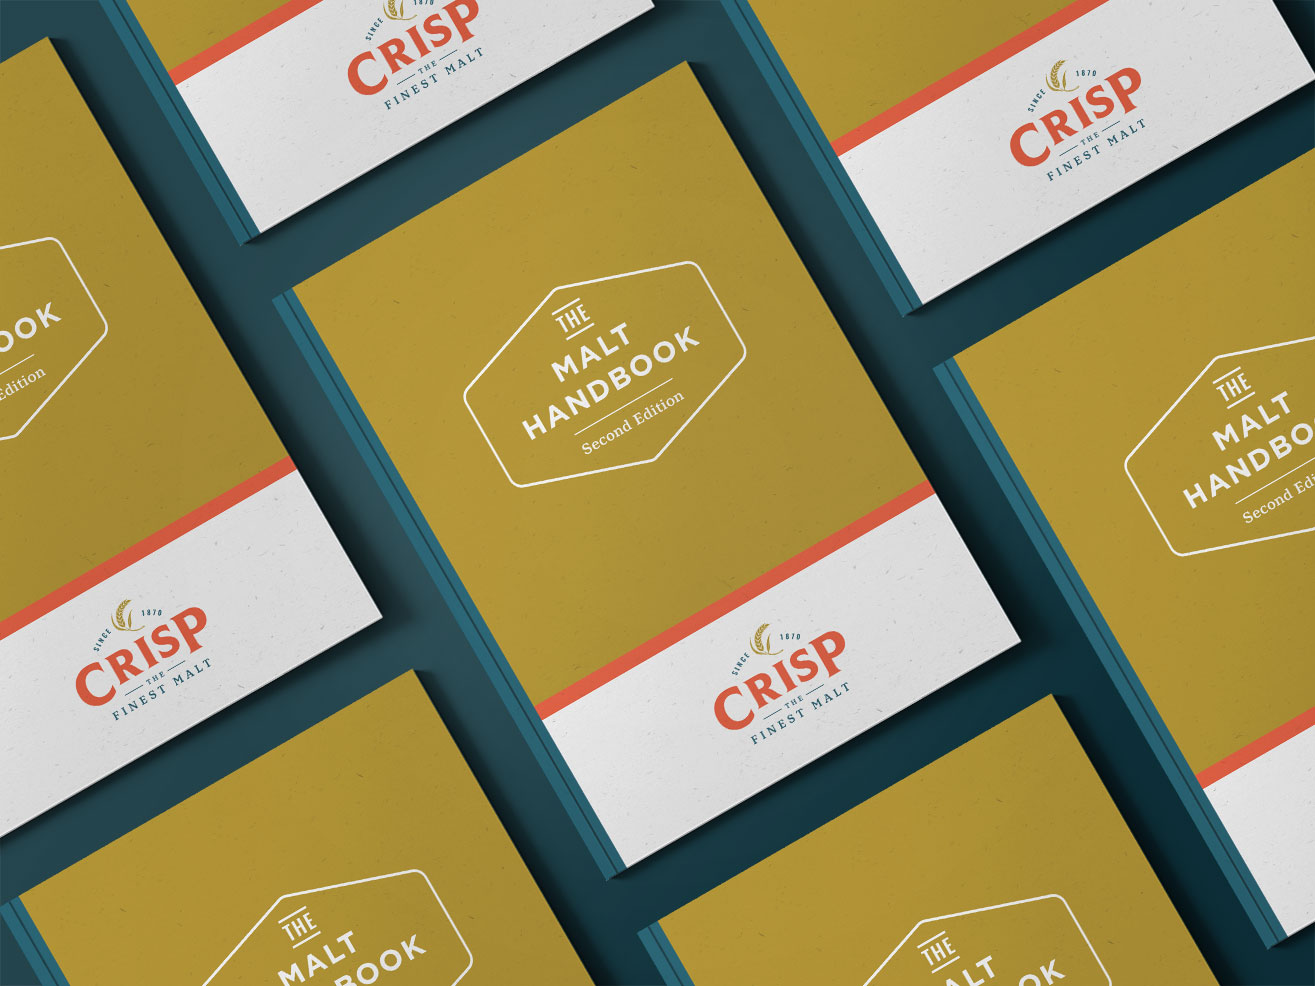 Crisp Malt Brand Handbook by Farrows